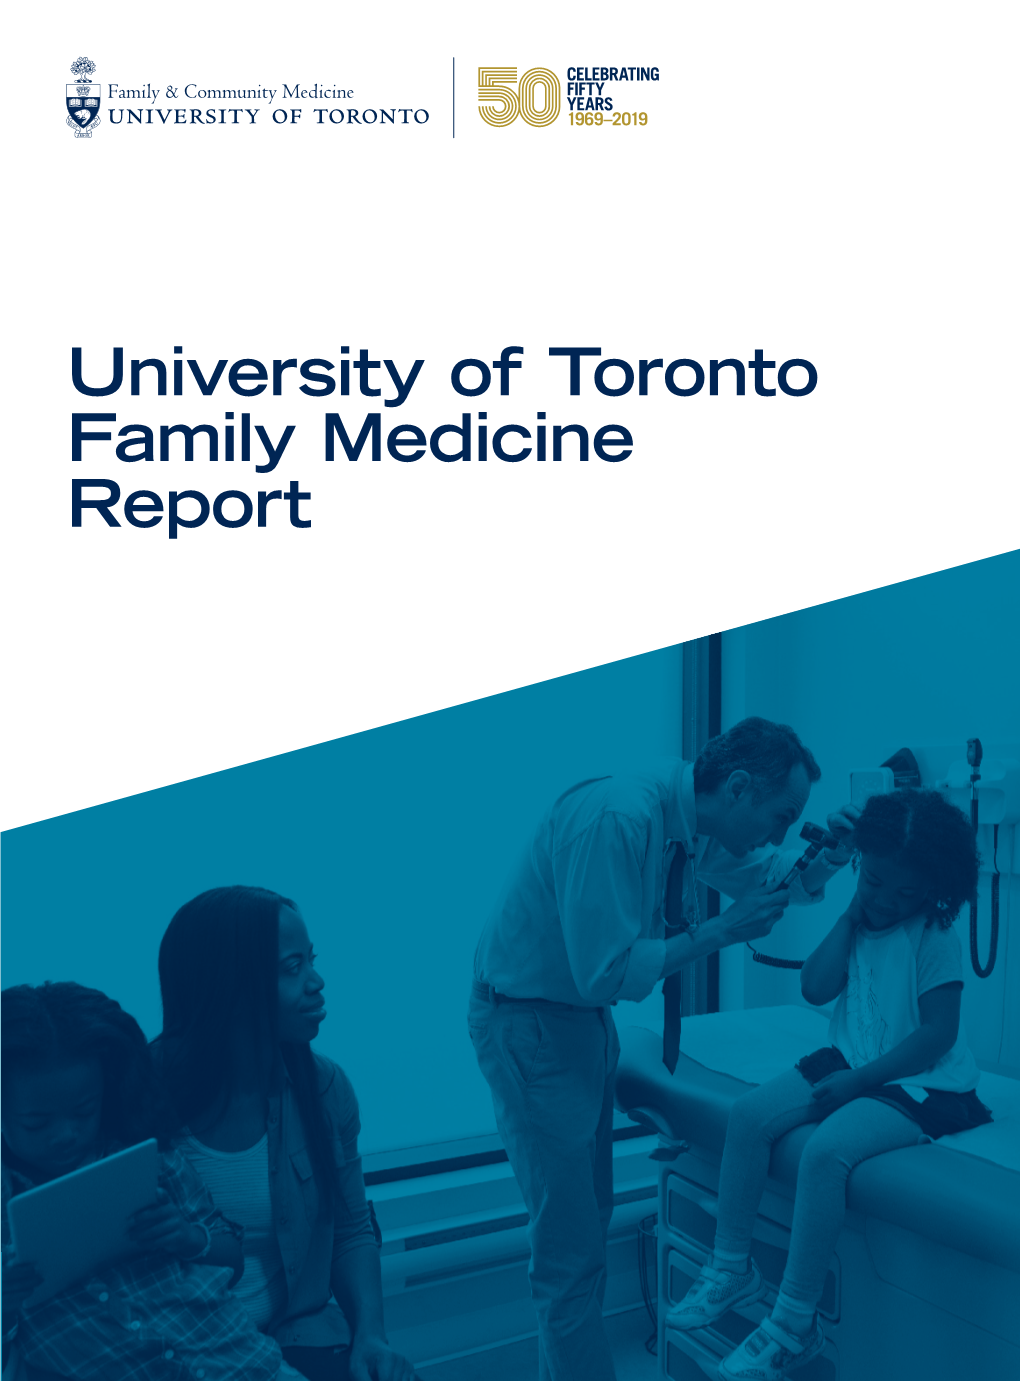 University of Toronto Family Medicine Report the University of Toronto Family Medicine Report Dr